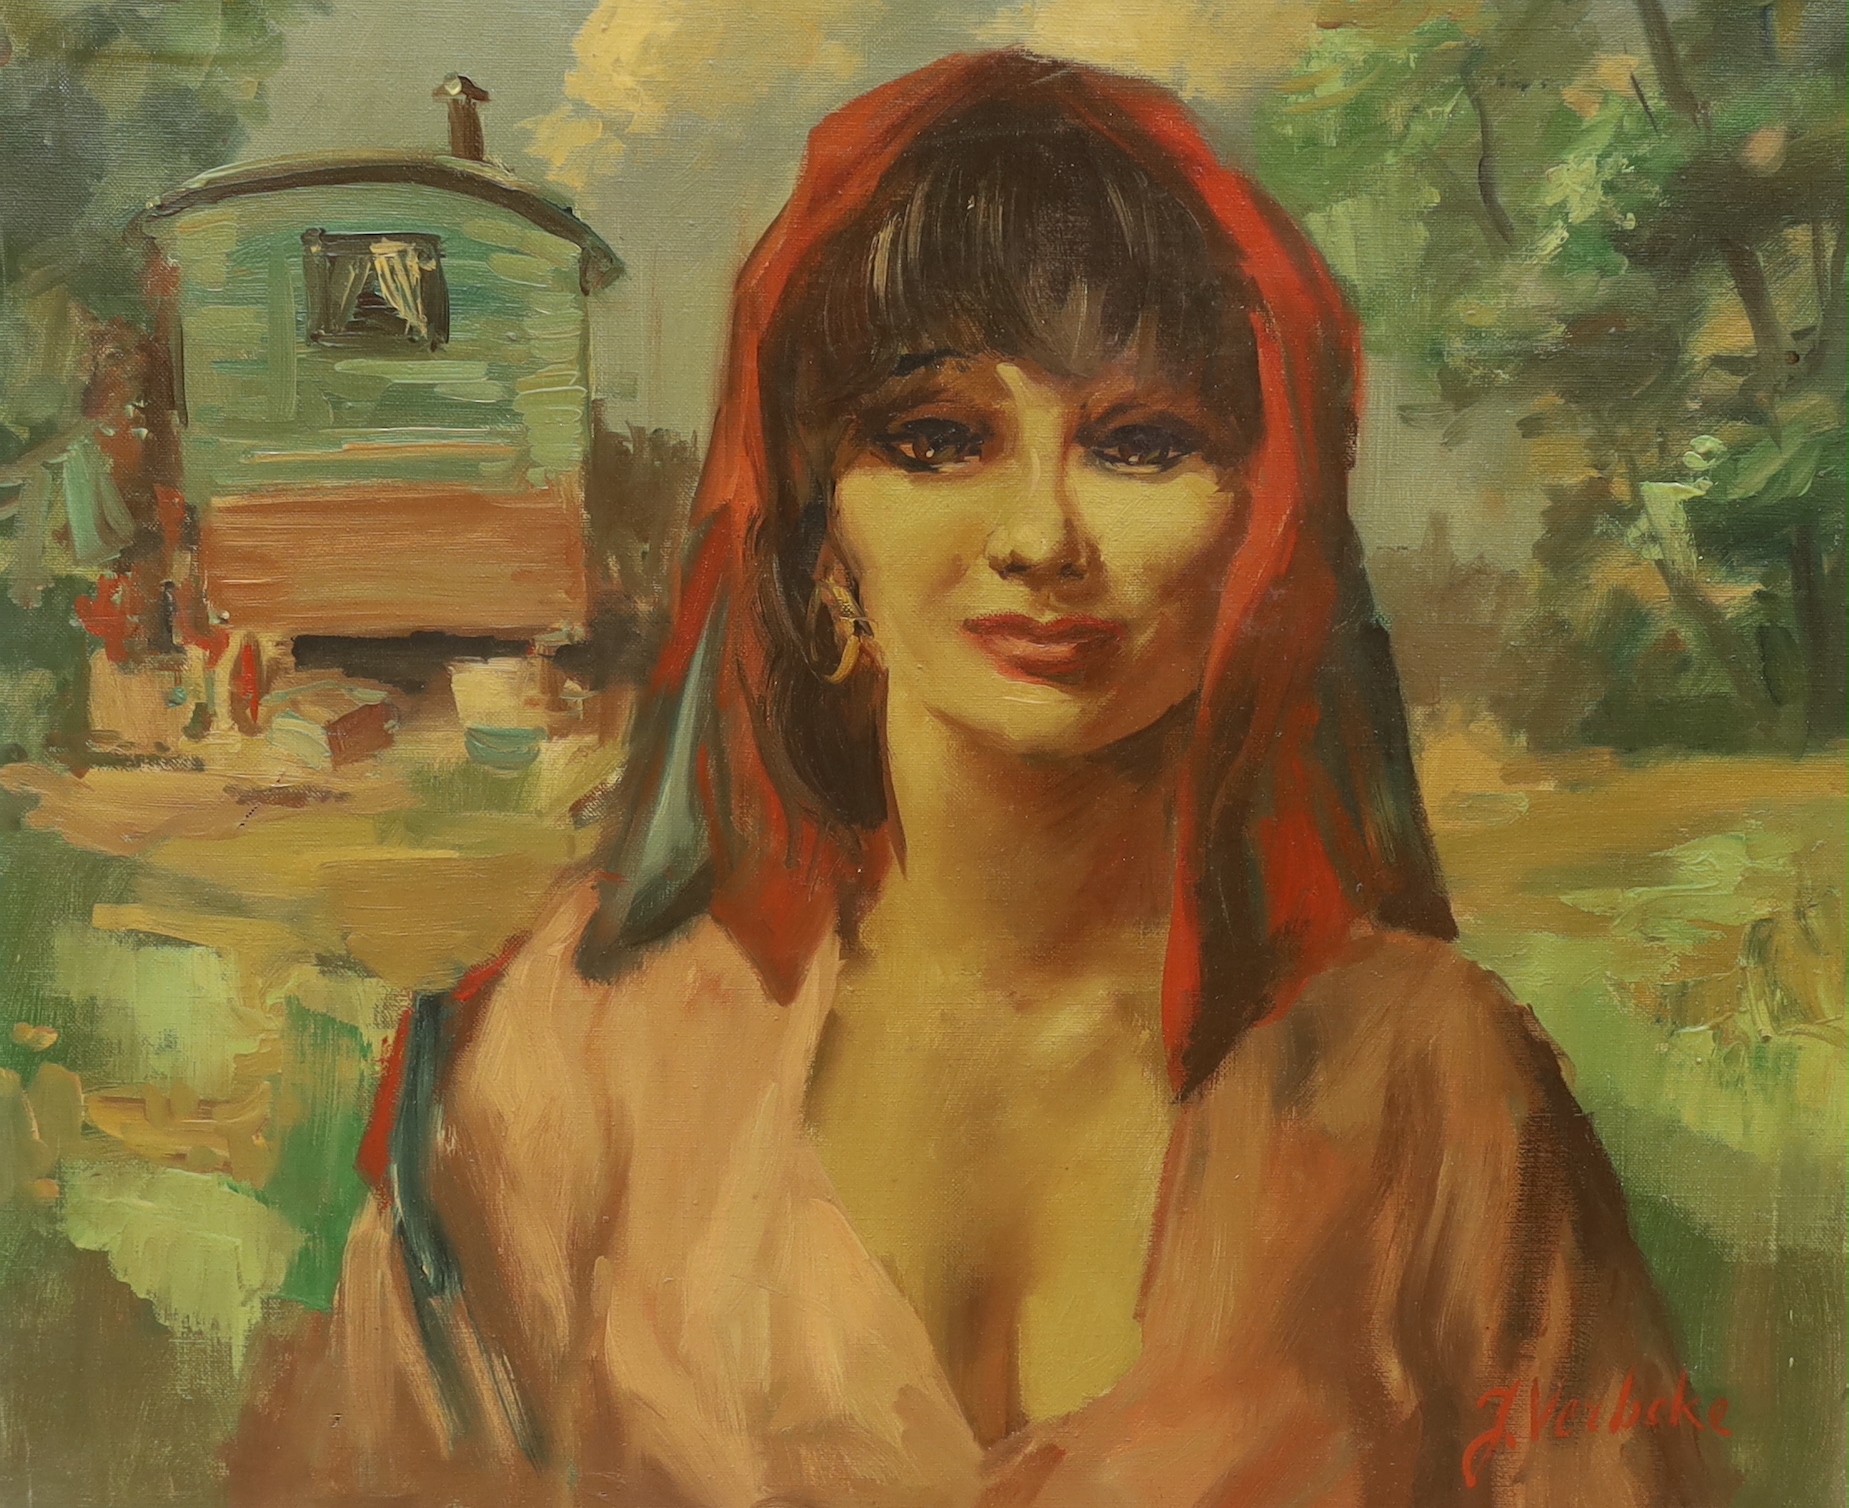 J. Verbske, oil on canvas, Portrait of a Romany woman, signed, 50 x 60cm, unframed